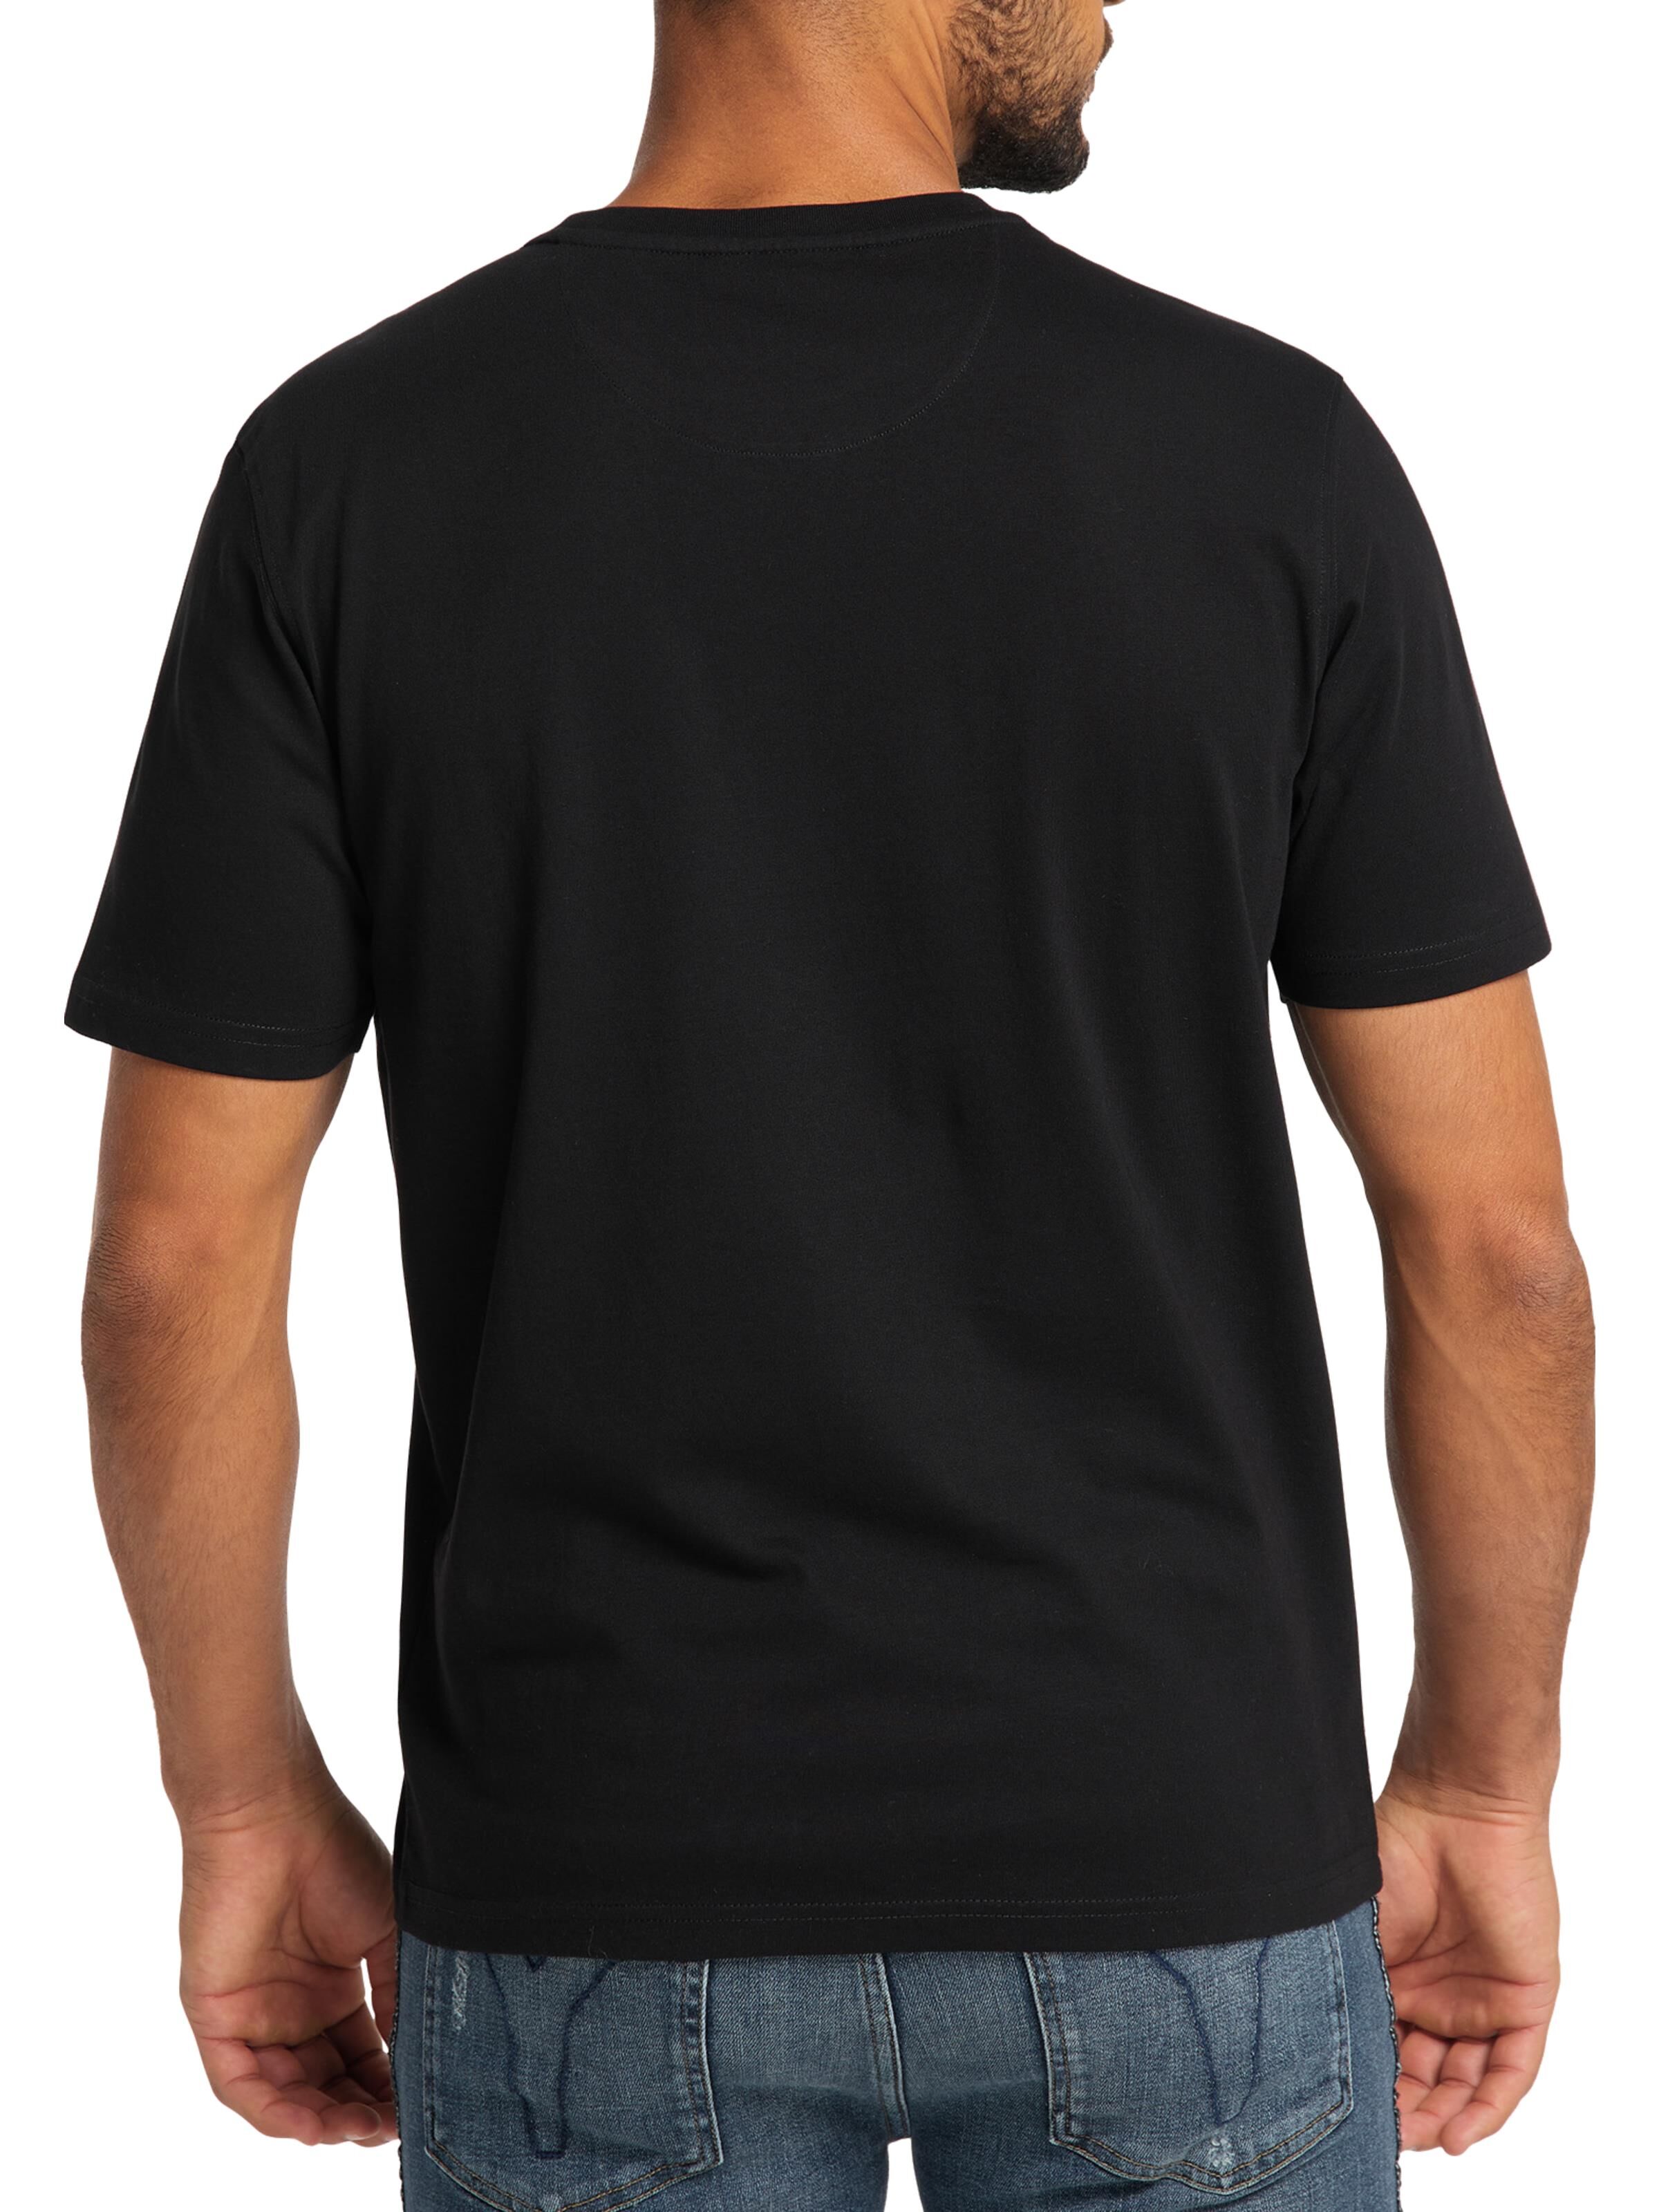 Herren T-Shirt mit 3D-Print